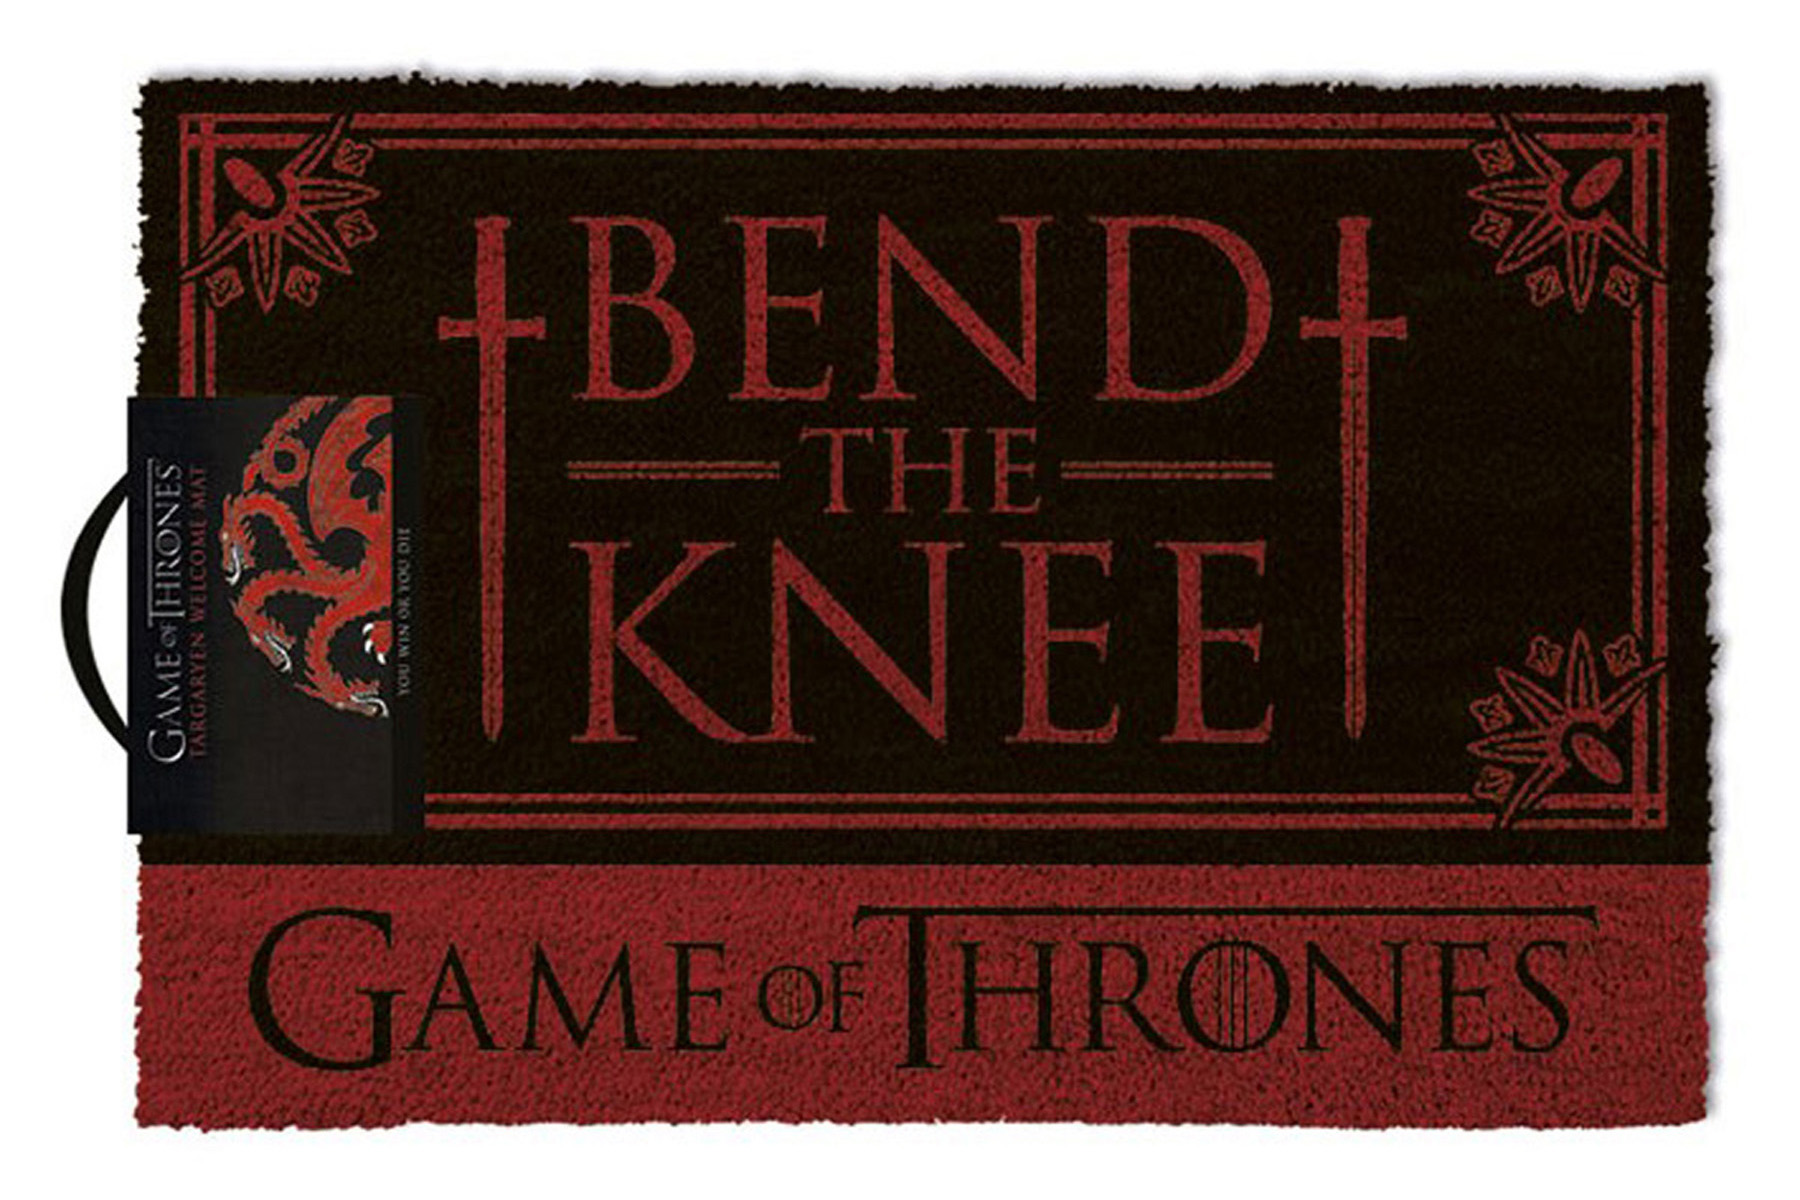 Fußmatte Kokos - - Knee Game Bend Of Thrones the